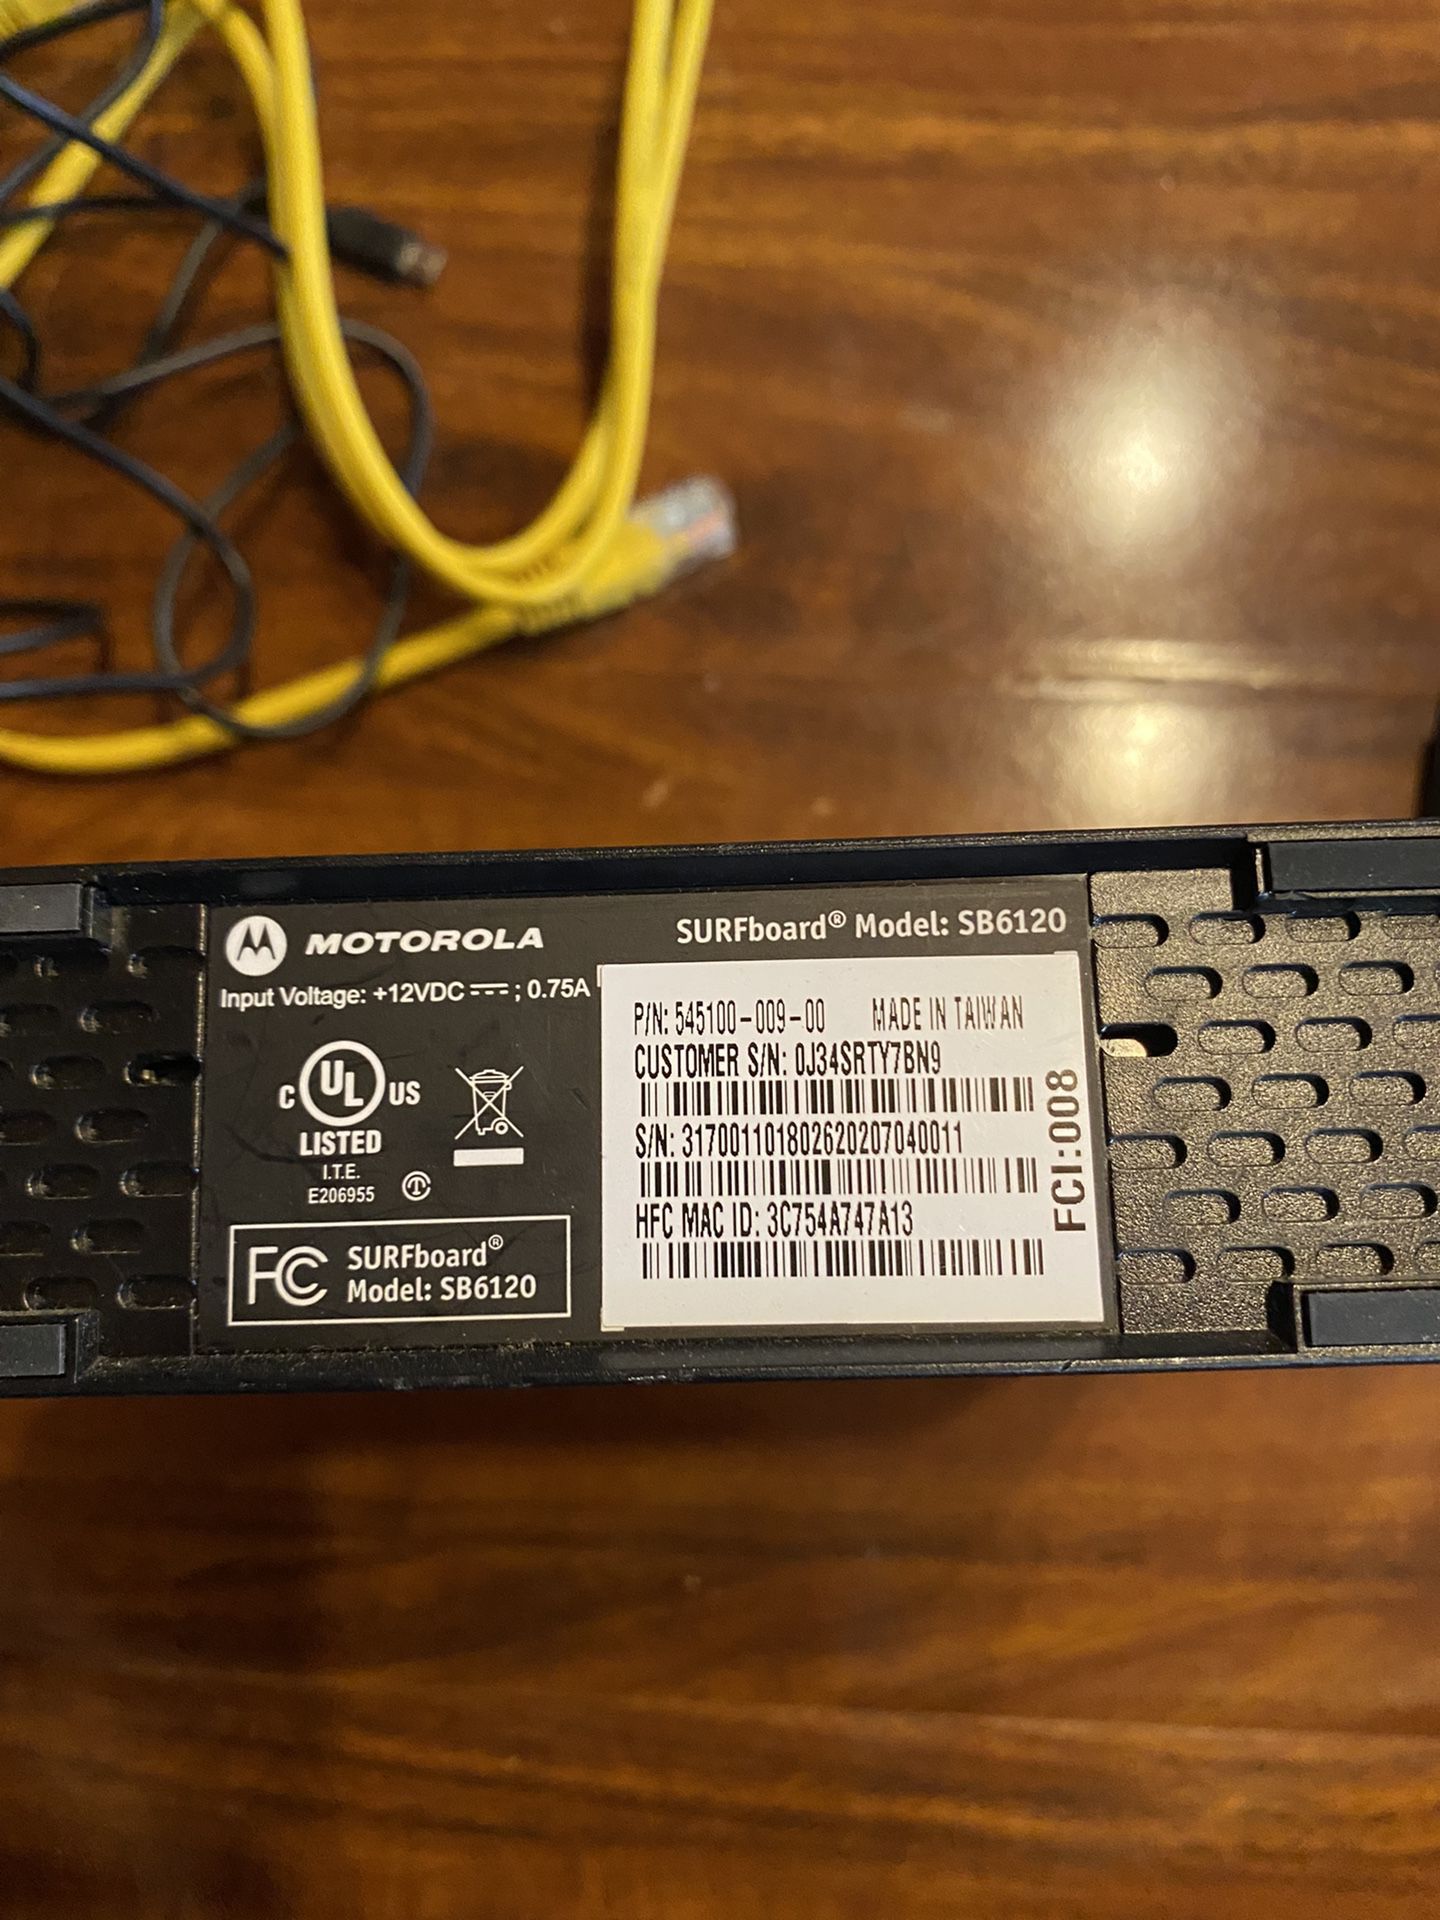 Motorola Surfboard SB6120 Cable Modem